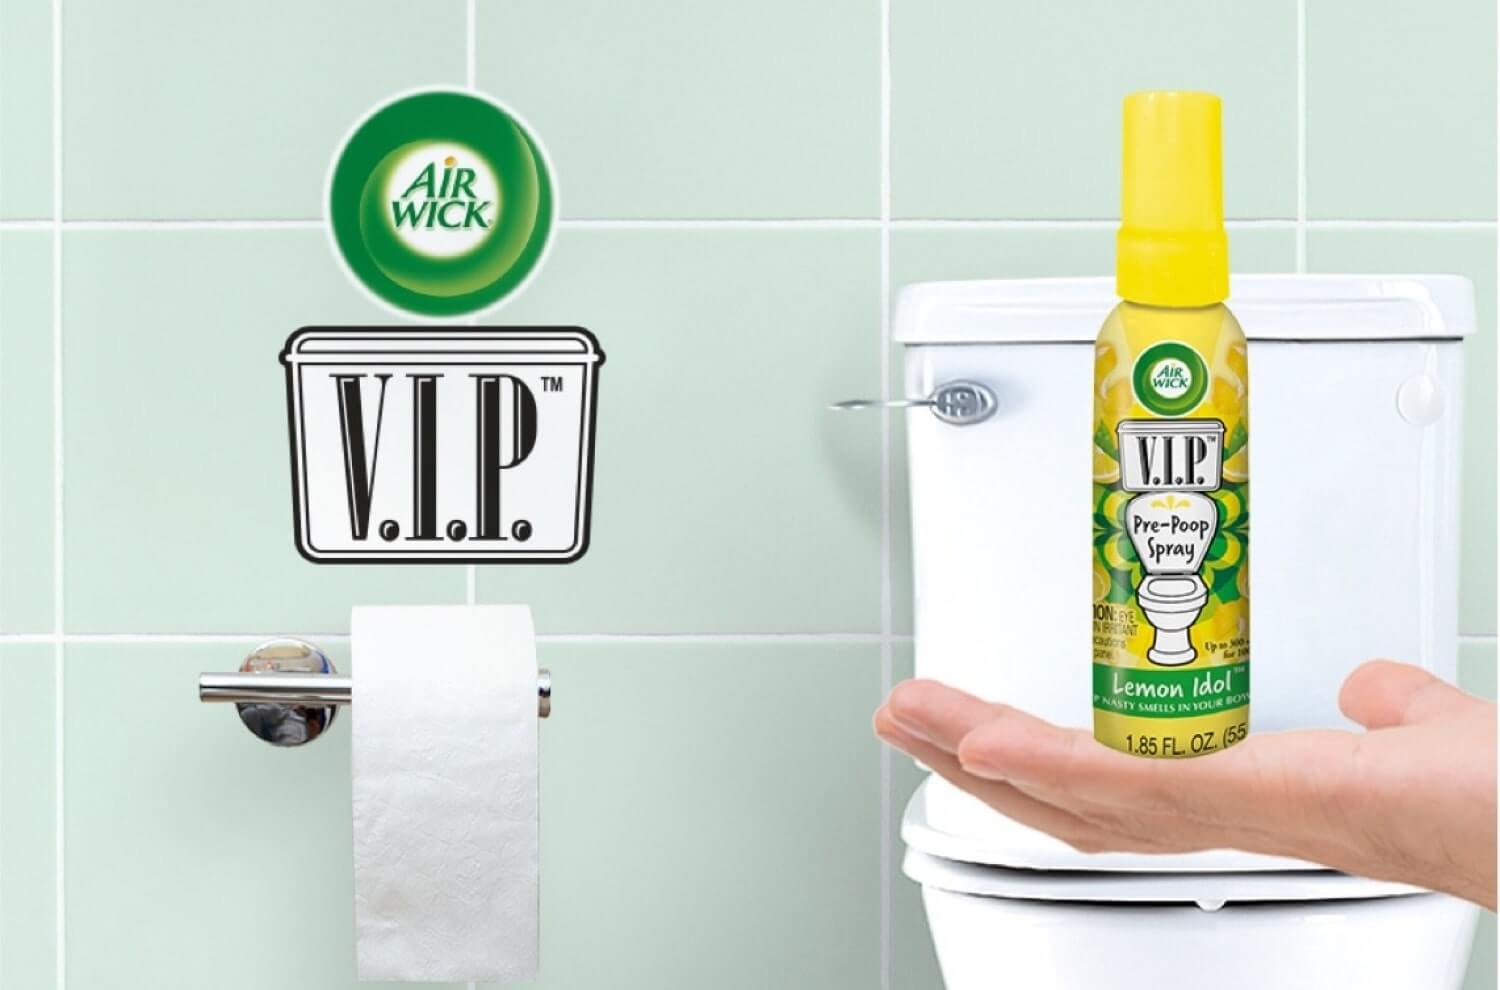 Air Wick V.I.P. Pre-Poop Toilet Spray, Lavender Superstar